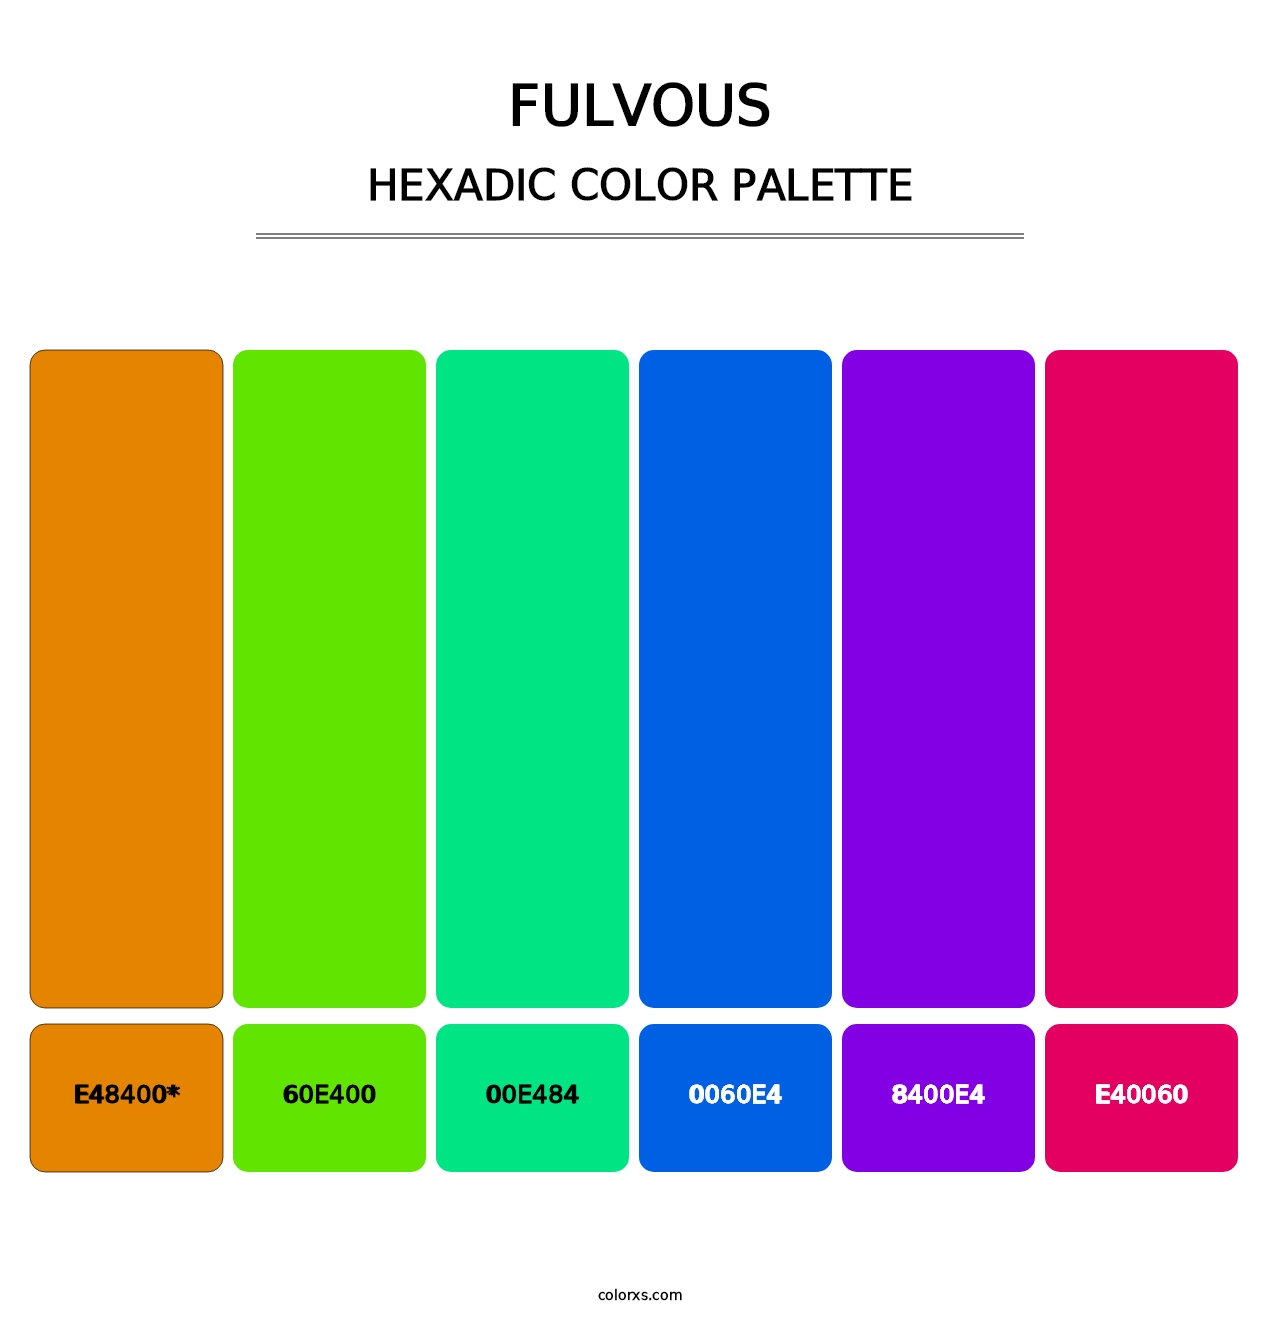 Fulvous - Hexadic Color Palette